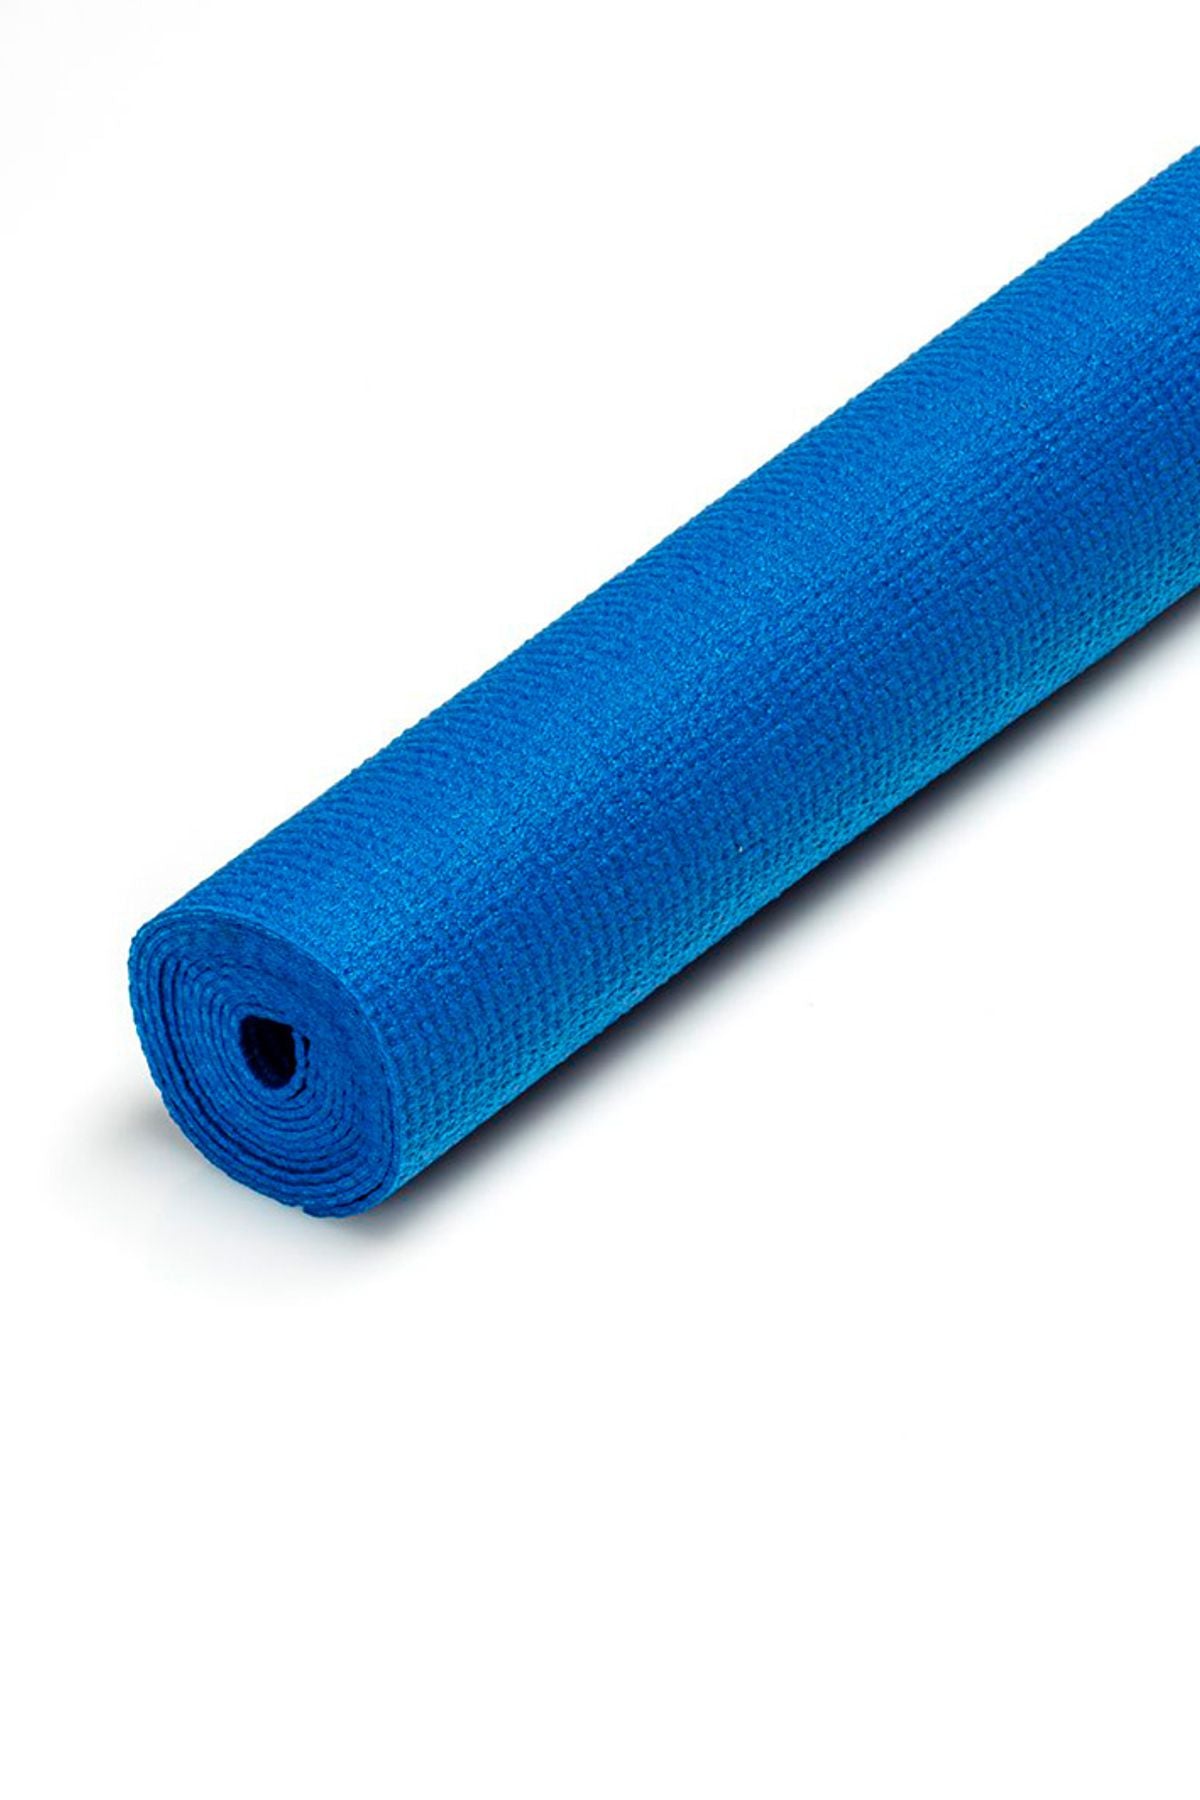 Kurma Spezial 2.9 mm Yoga Matı Lacivert